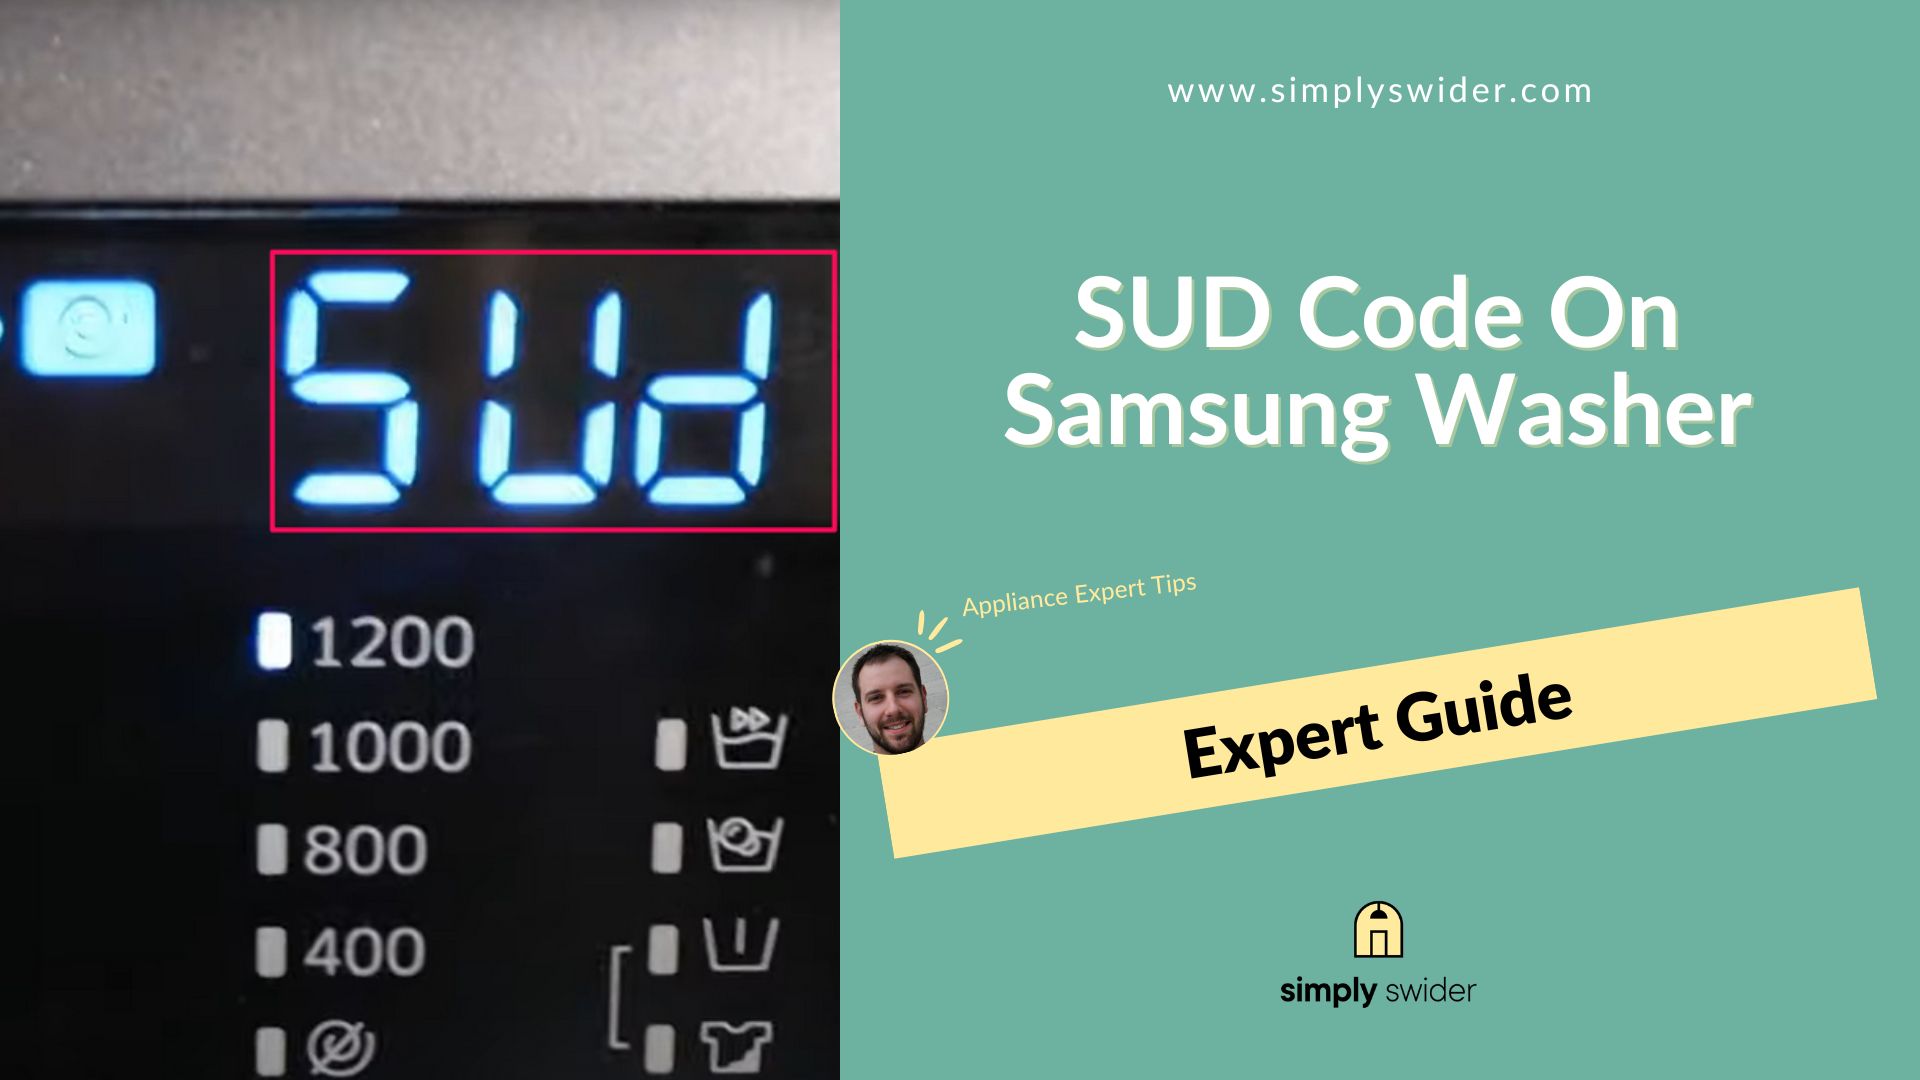 SUD Code On Samsung Washer